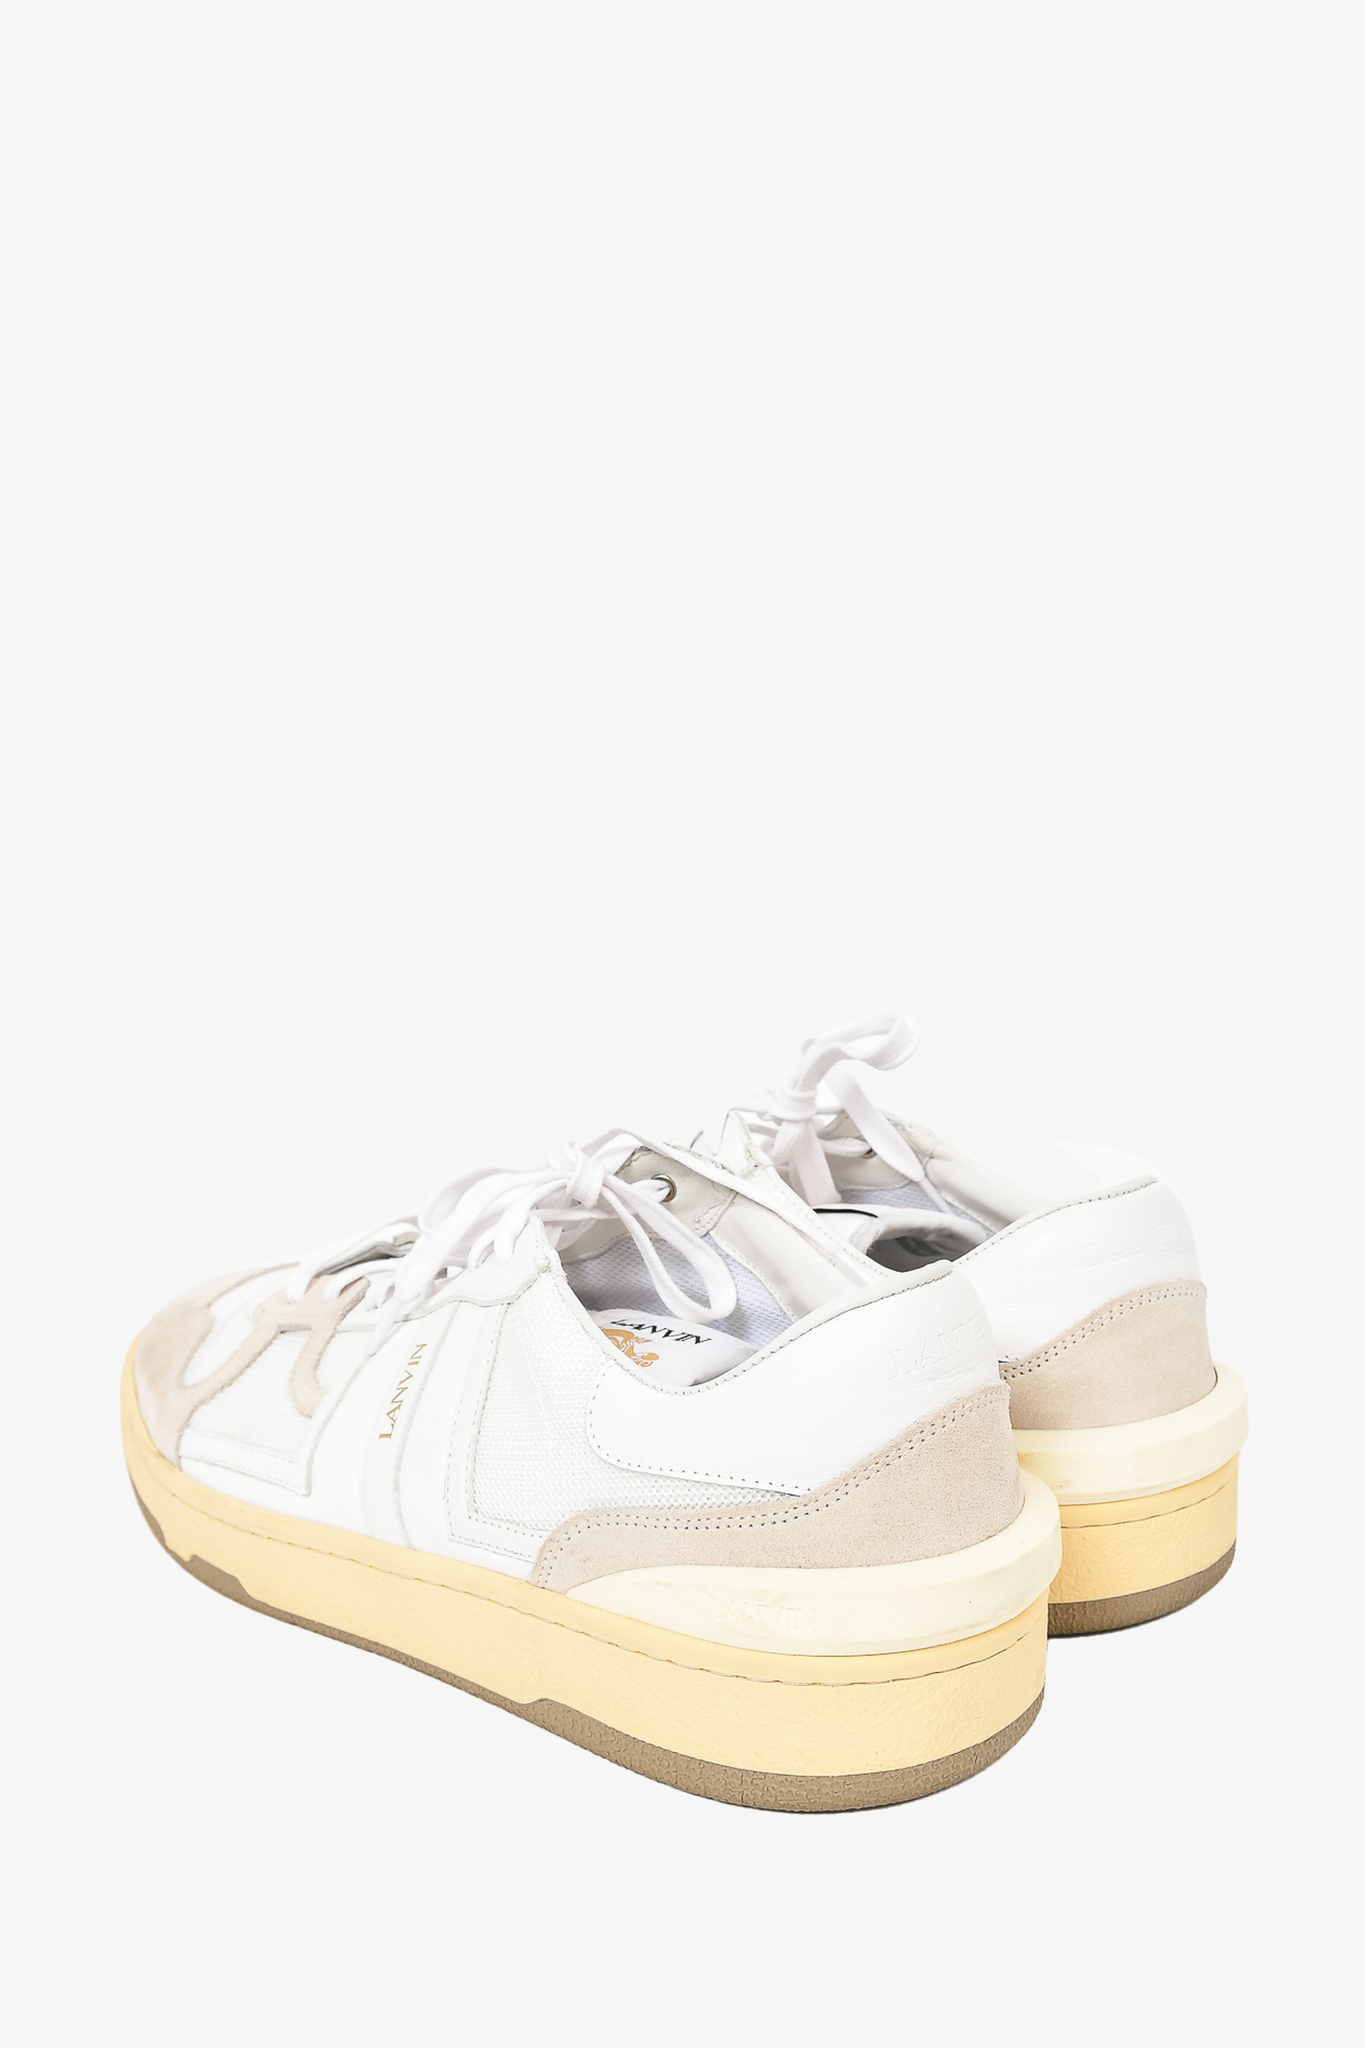 Lanvin White/Beige Low-Top Sneakers Size 45